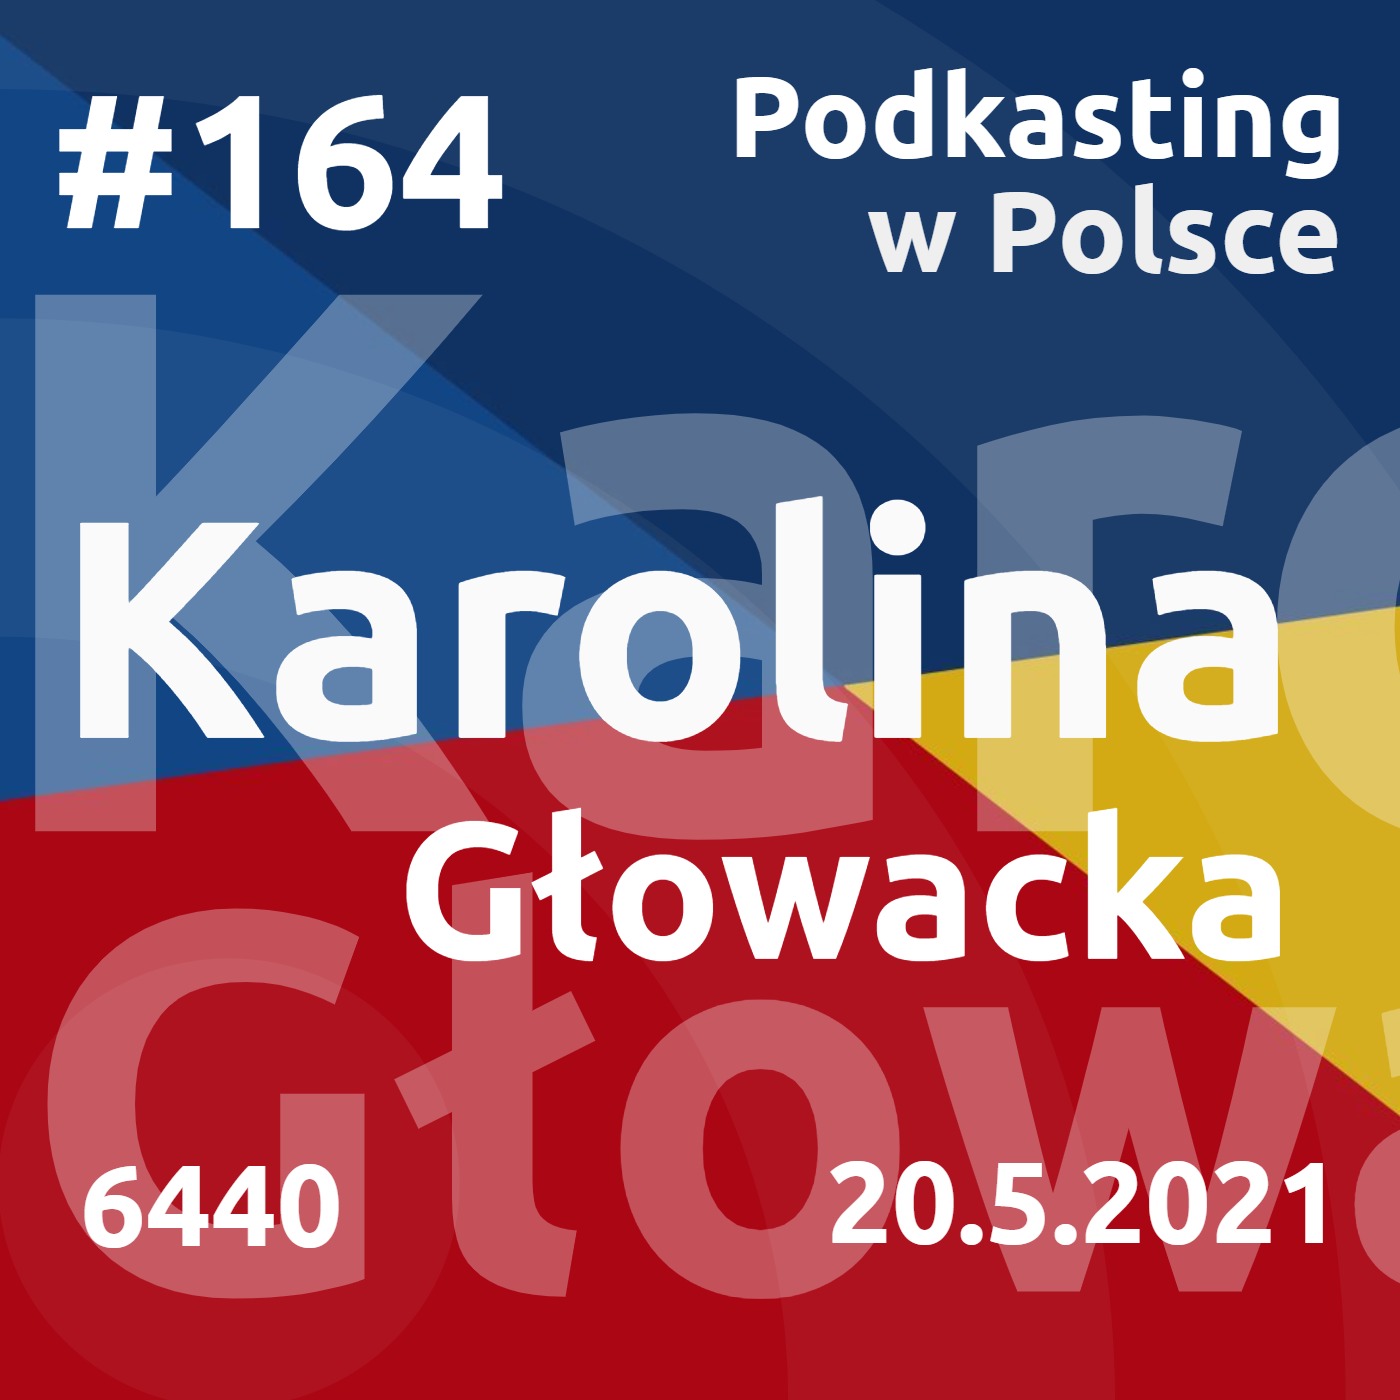 #164 - Karolina Głowacka